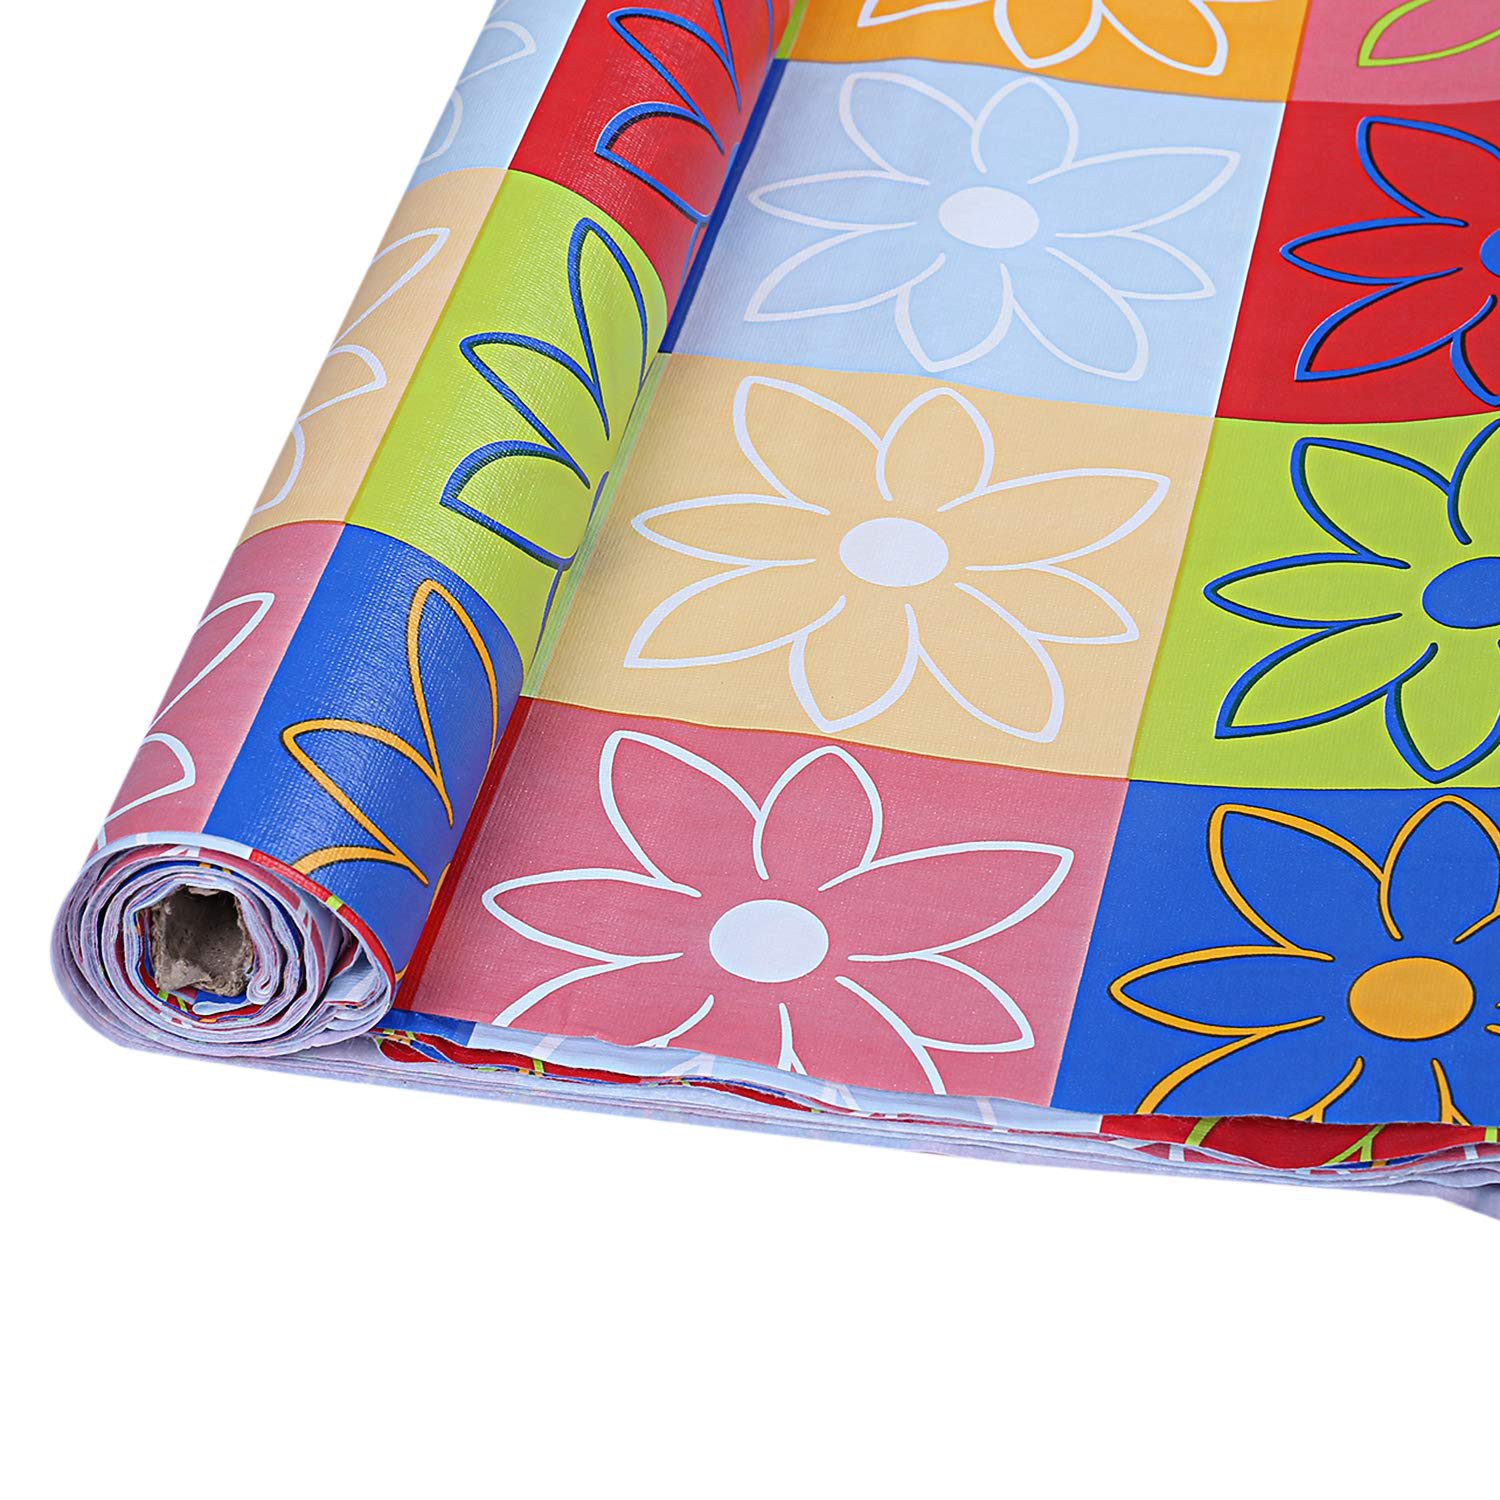 Kuber Industries Shelf Mat|Waterproof Floral Check Textured PVC Anti-Slip Sheets|Durable Kitchen Cabinet Drawer Shelf Liner,5 Meter,(Brown)